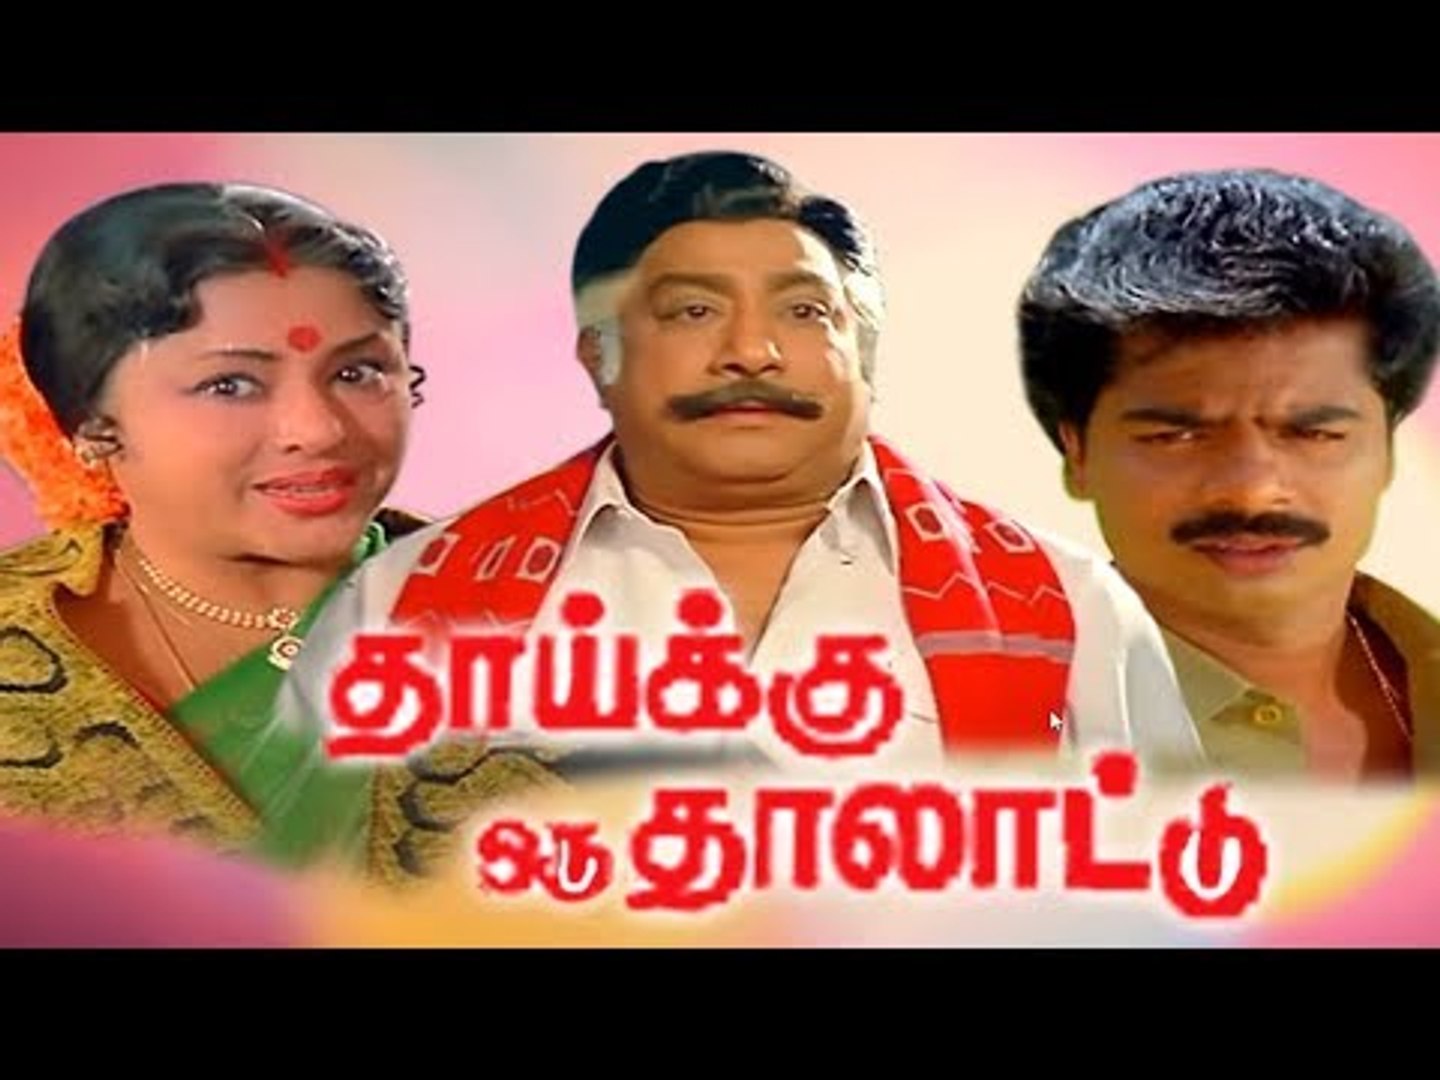 Thaaikku Oru Thalattu Full Movie # Tamil Movies # Tamil Comedy Movies # Pandiyan,Sivaji,Padmini